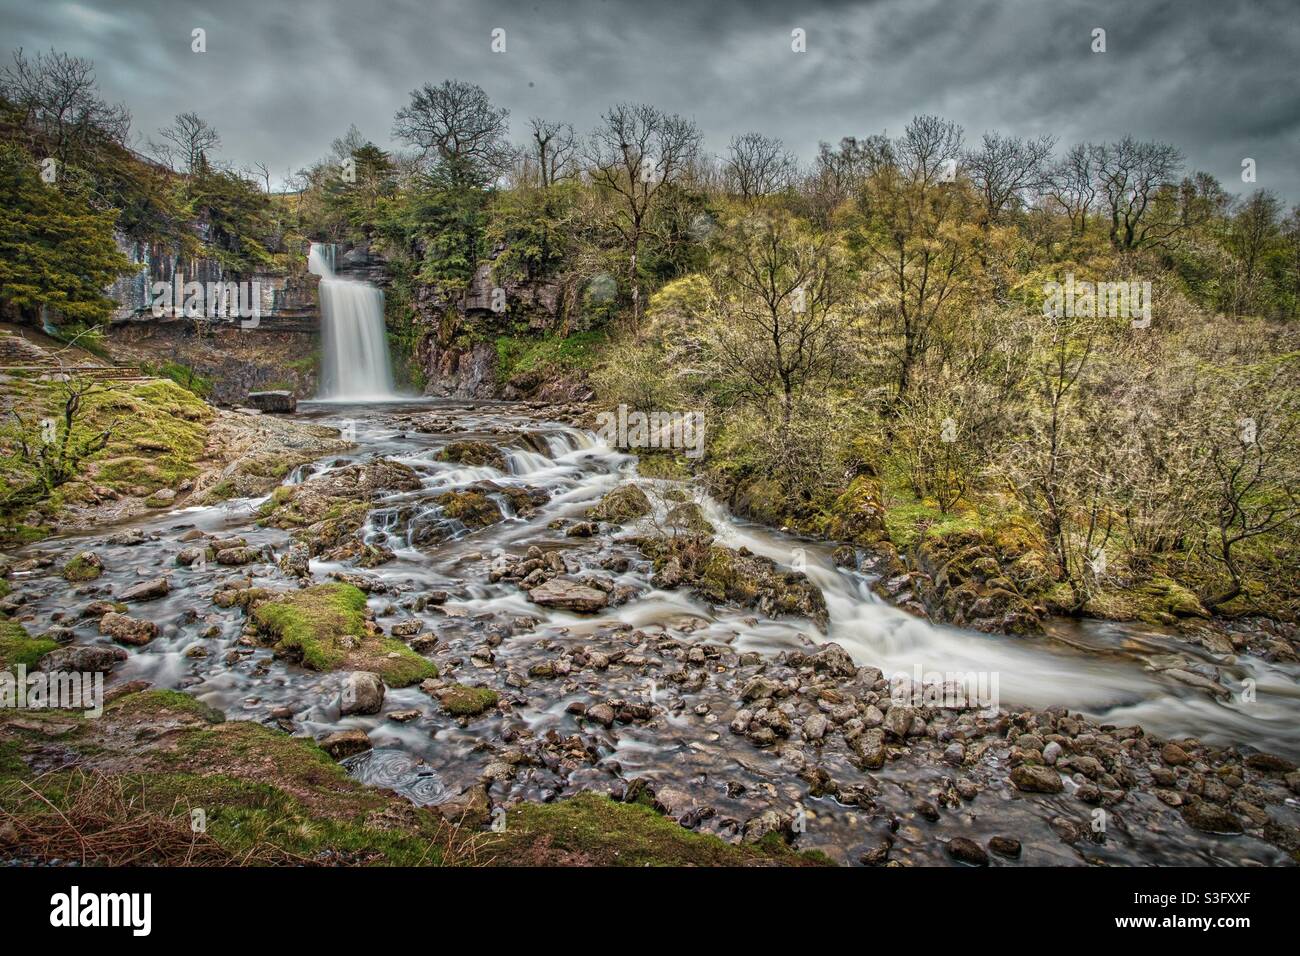 Thornton force waterfall at ingleton waterfalls park Stock Photo